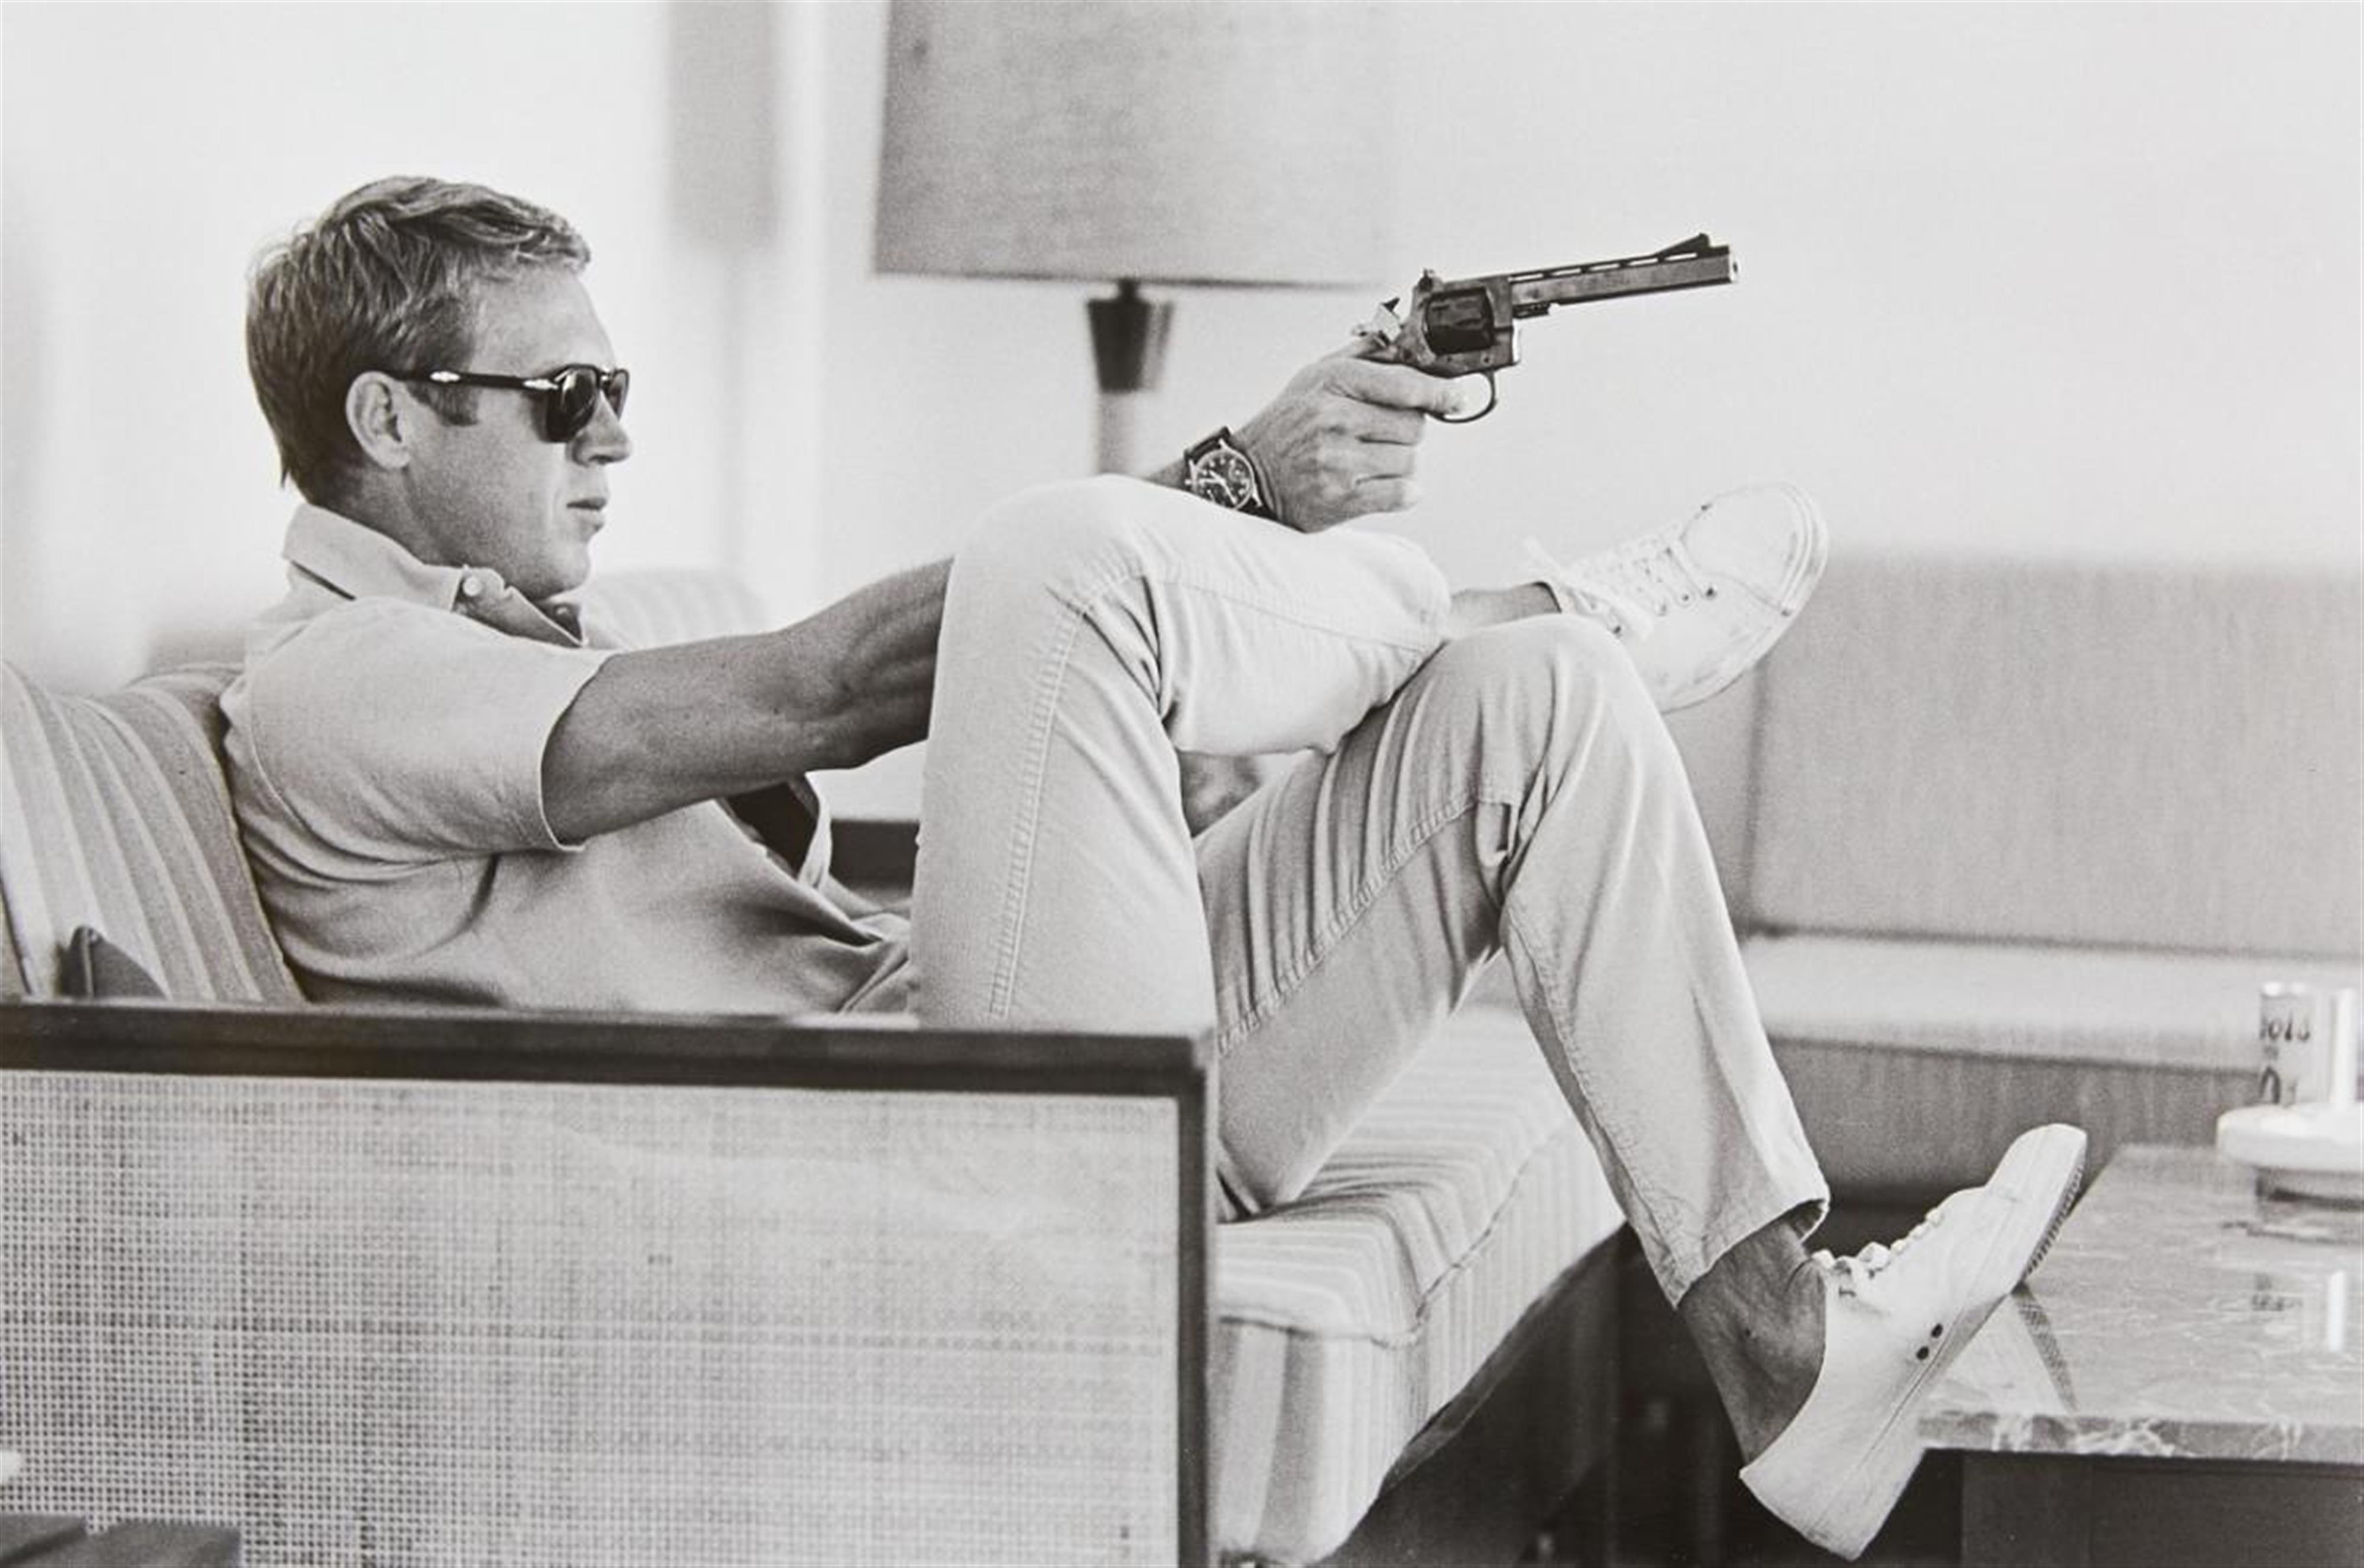 John Dominis - Steve McQueen aims a pistol in his living room - image-1